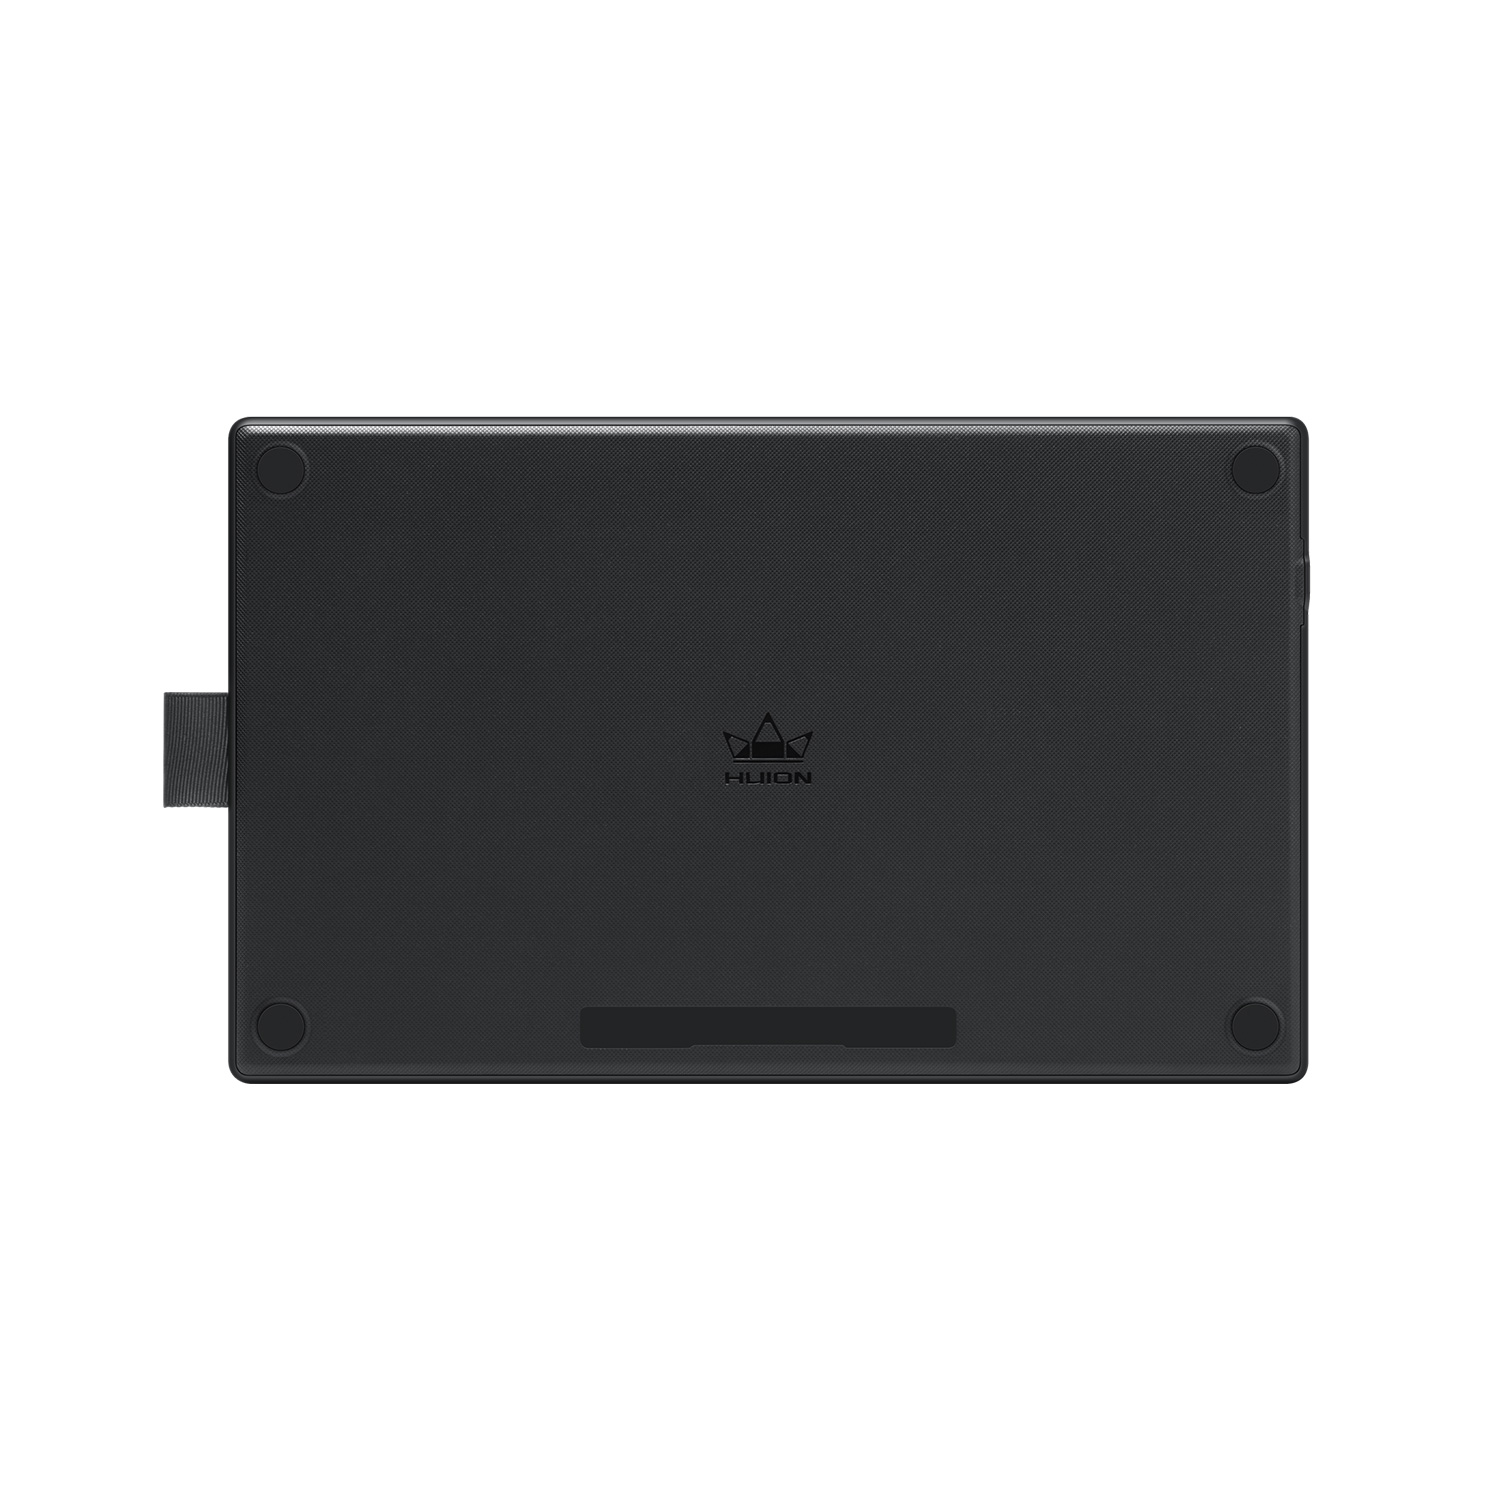 Huion RTM-500 Graphics Tablet Black | Graphic tablets | Tablets ...